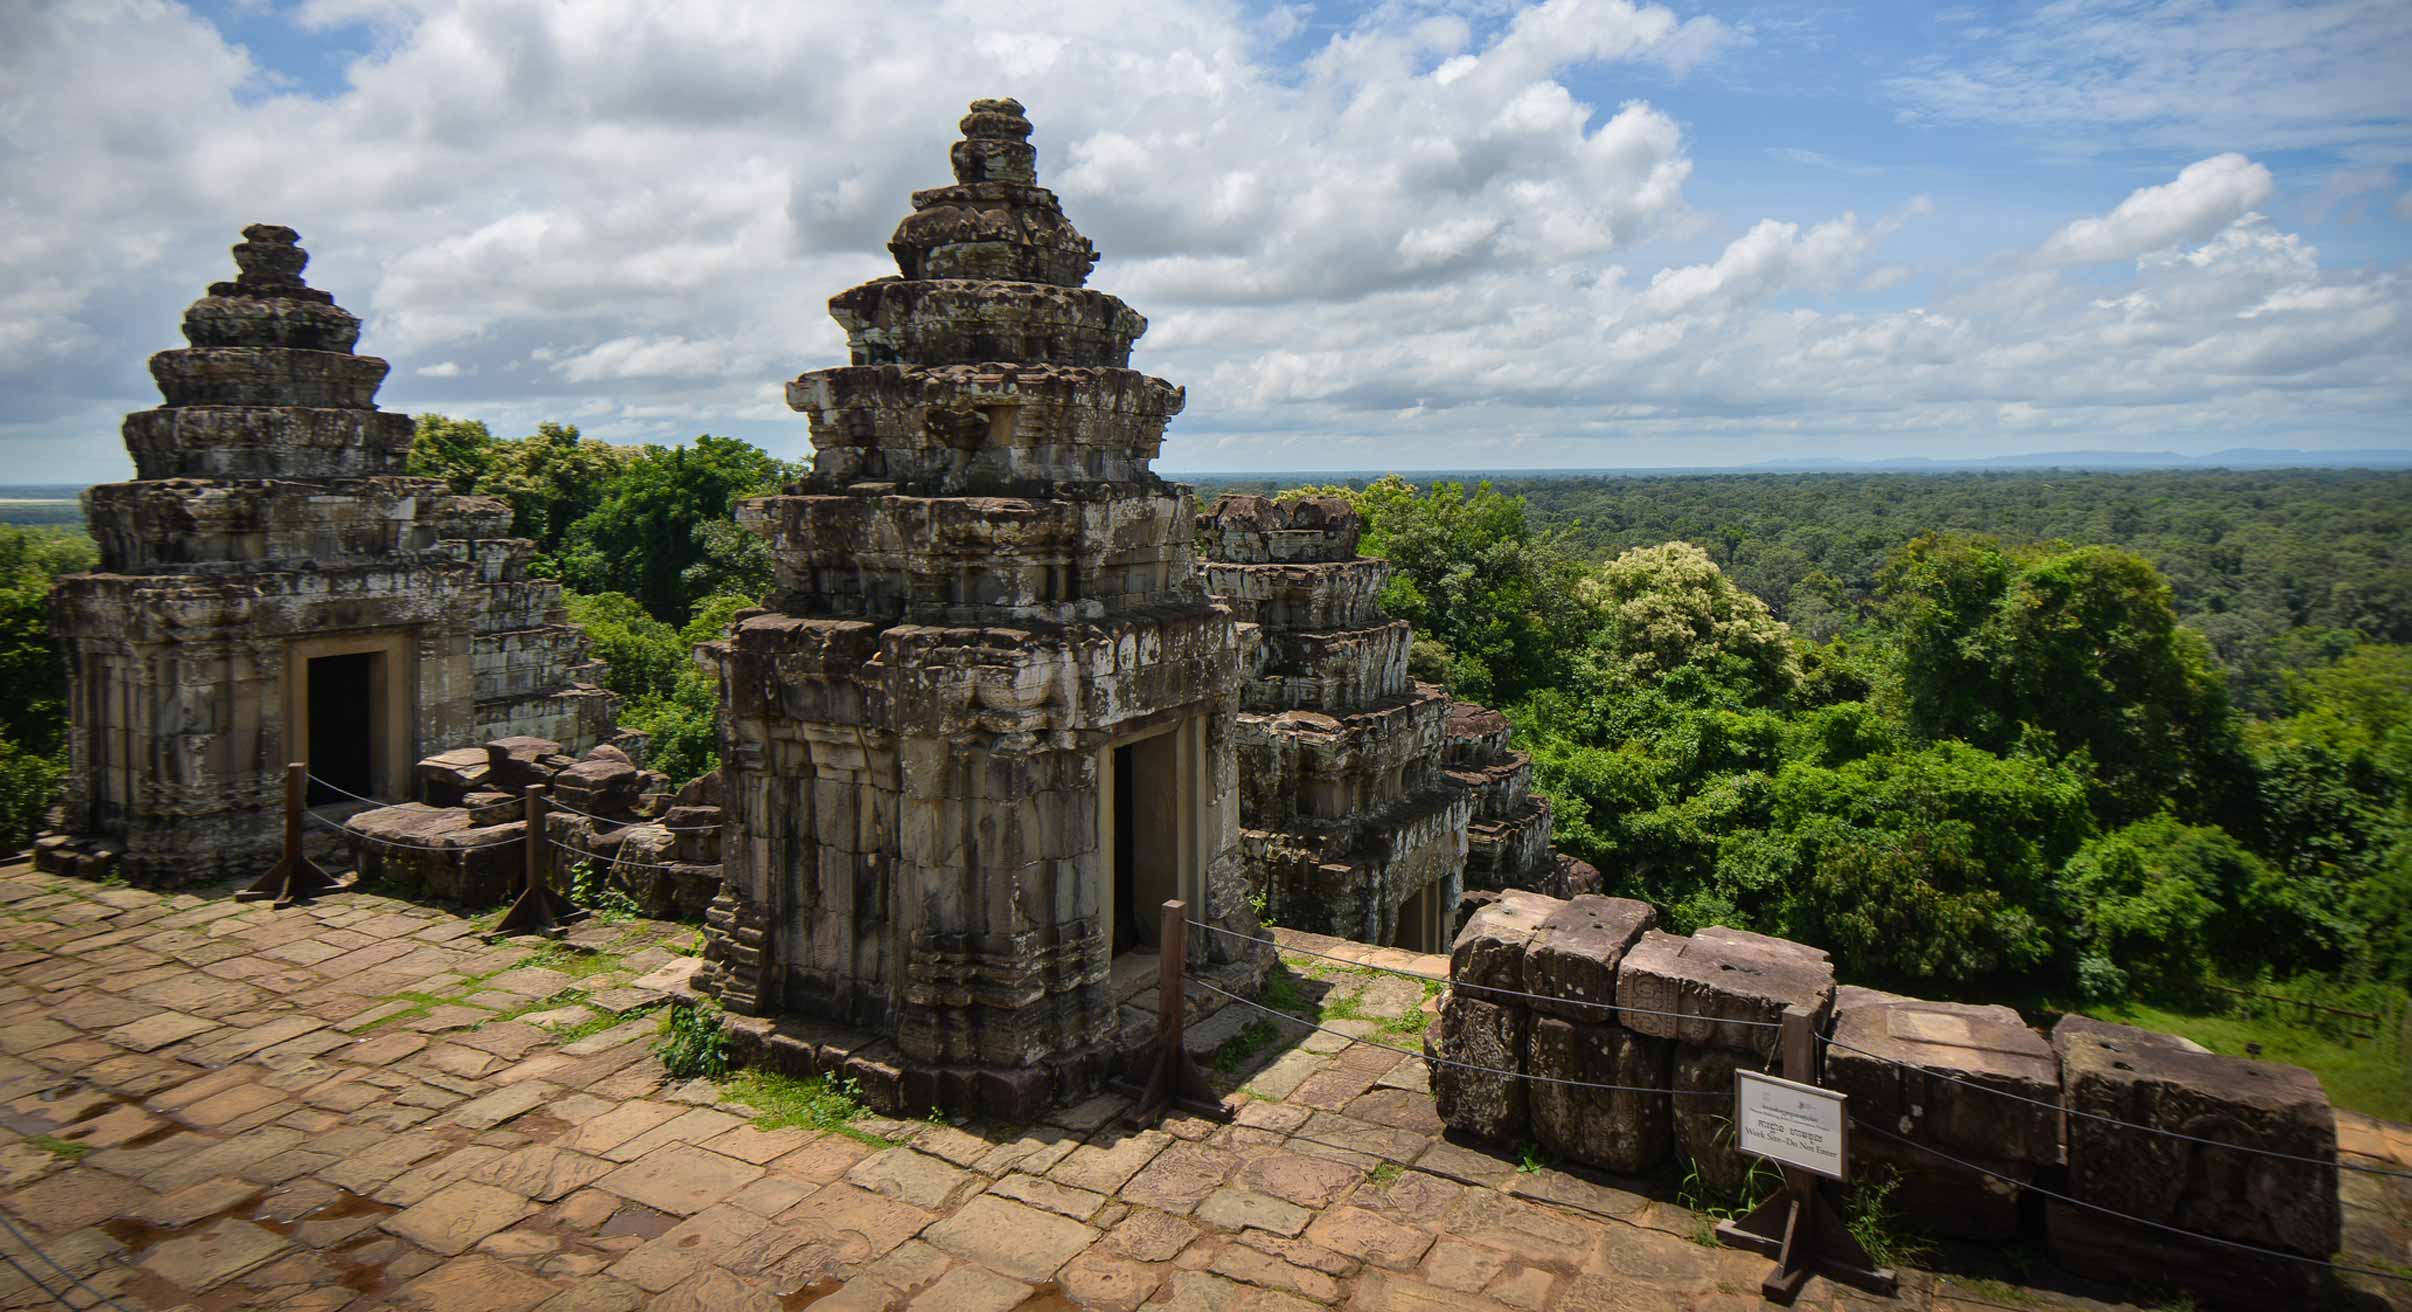 Phnom Bakheng temple in Cambodia